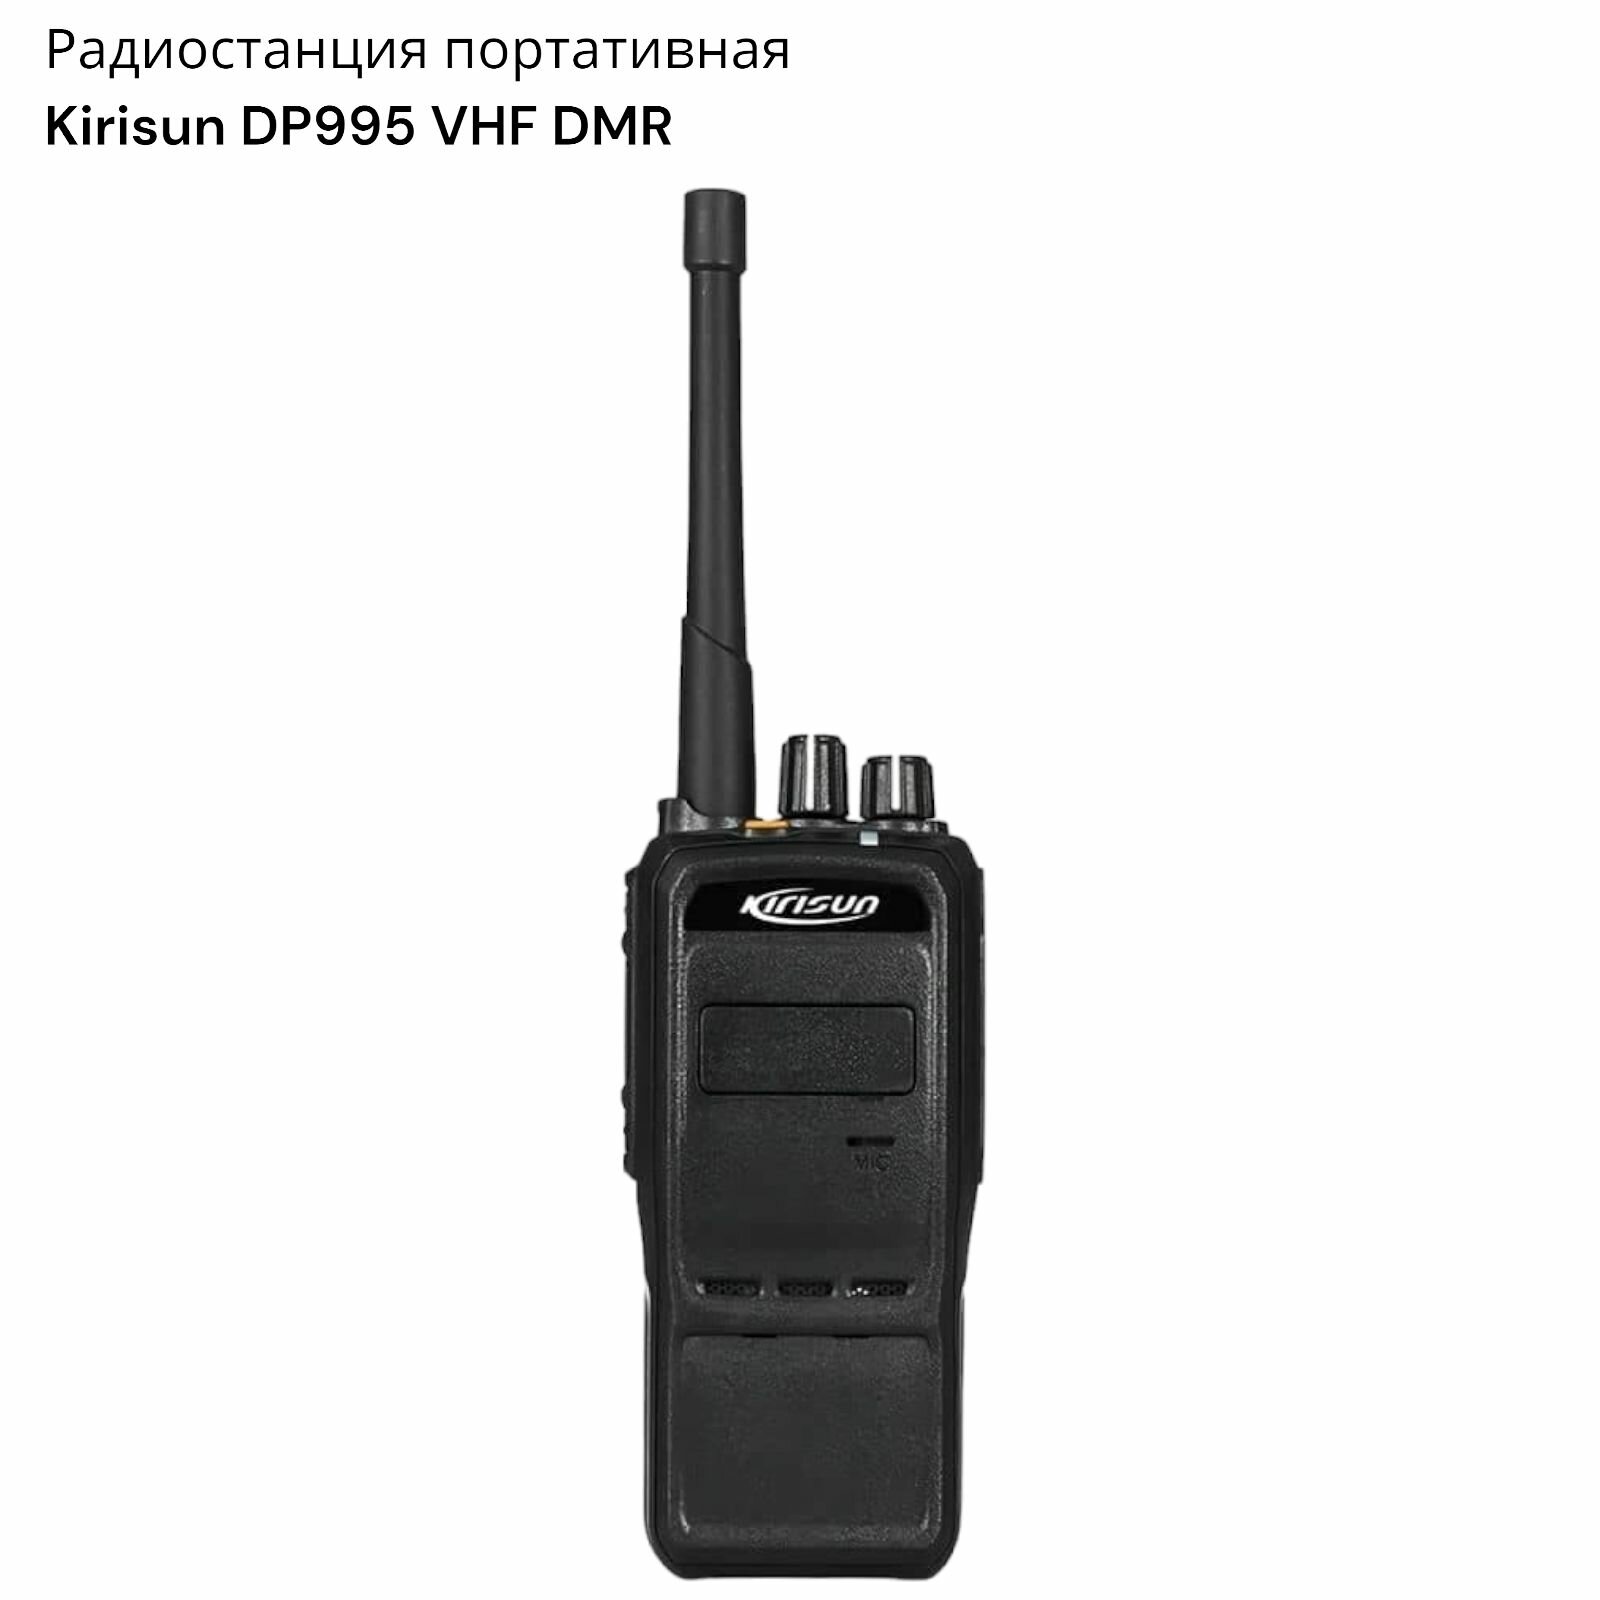 Радиостанция портативная Kirisun DP995 VHF DMR